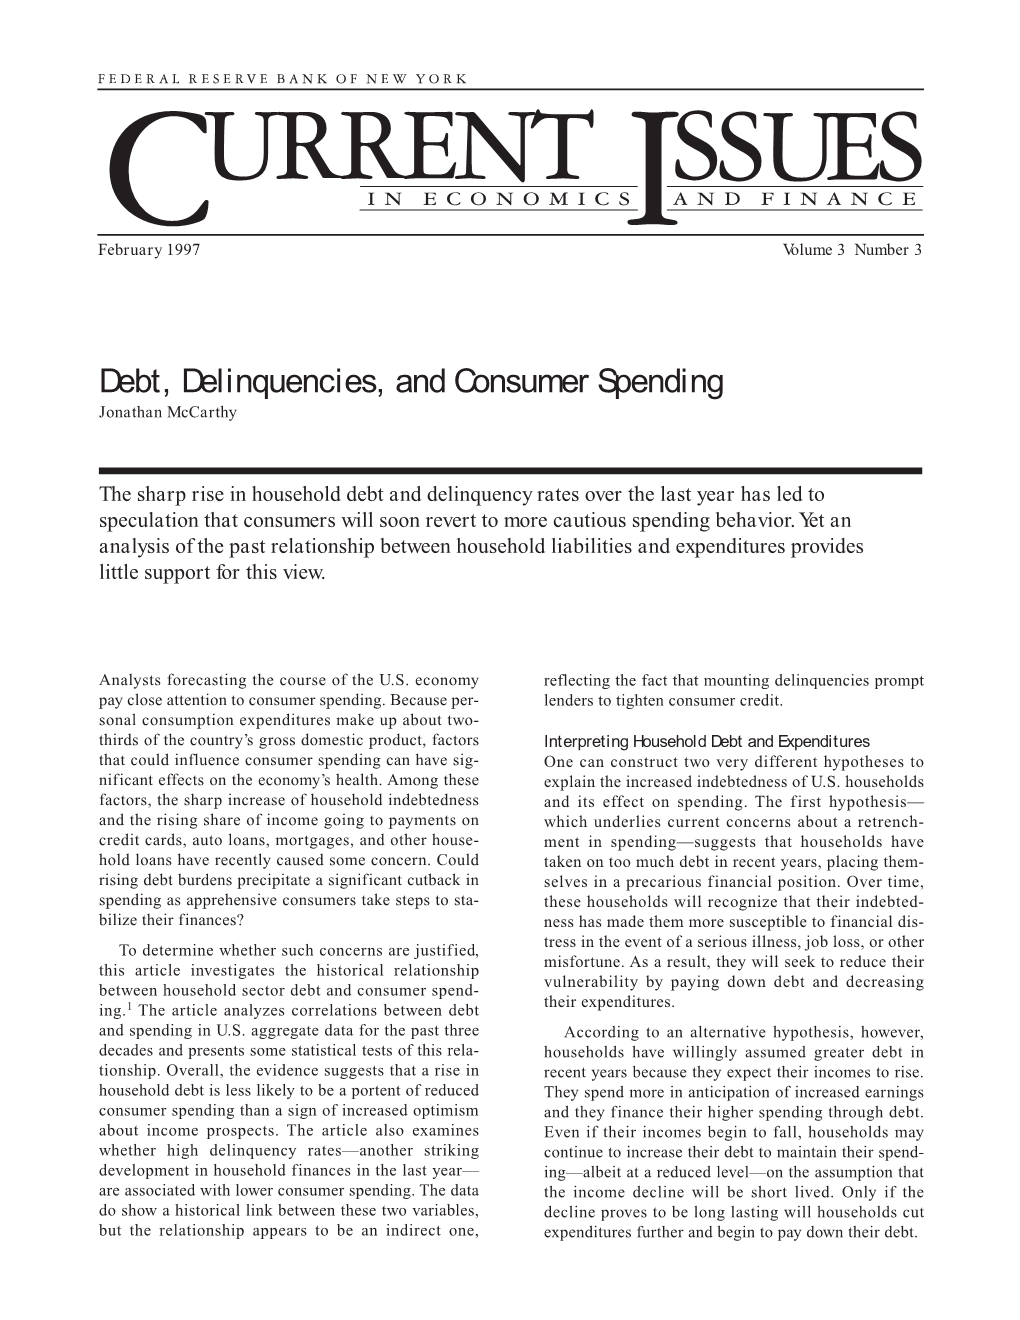 Debt, Delinquencies, and Consumer Spending Jonathan Mccarthy